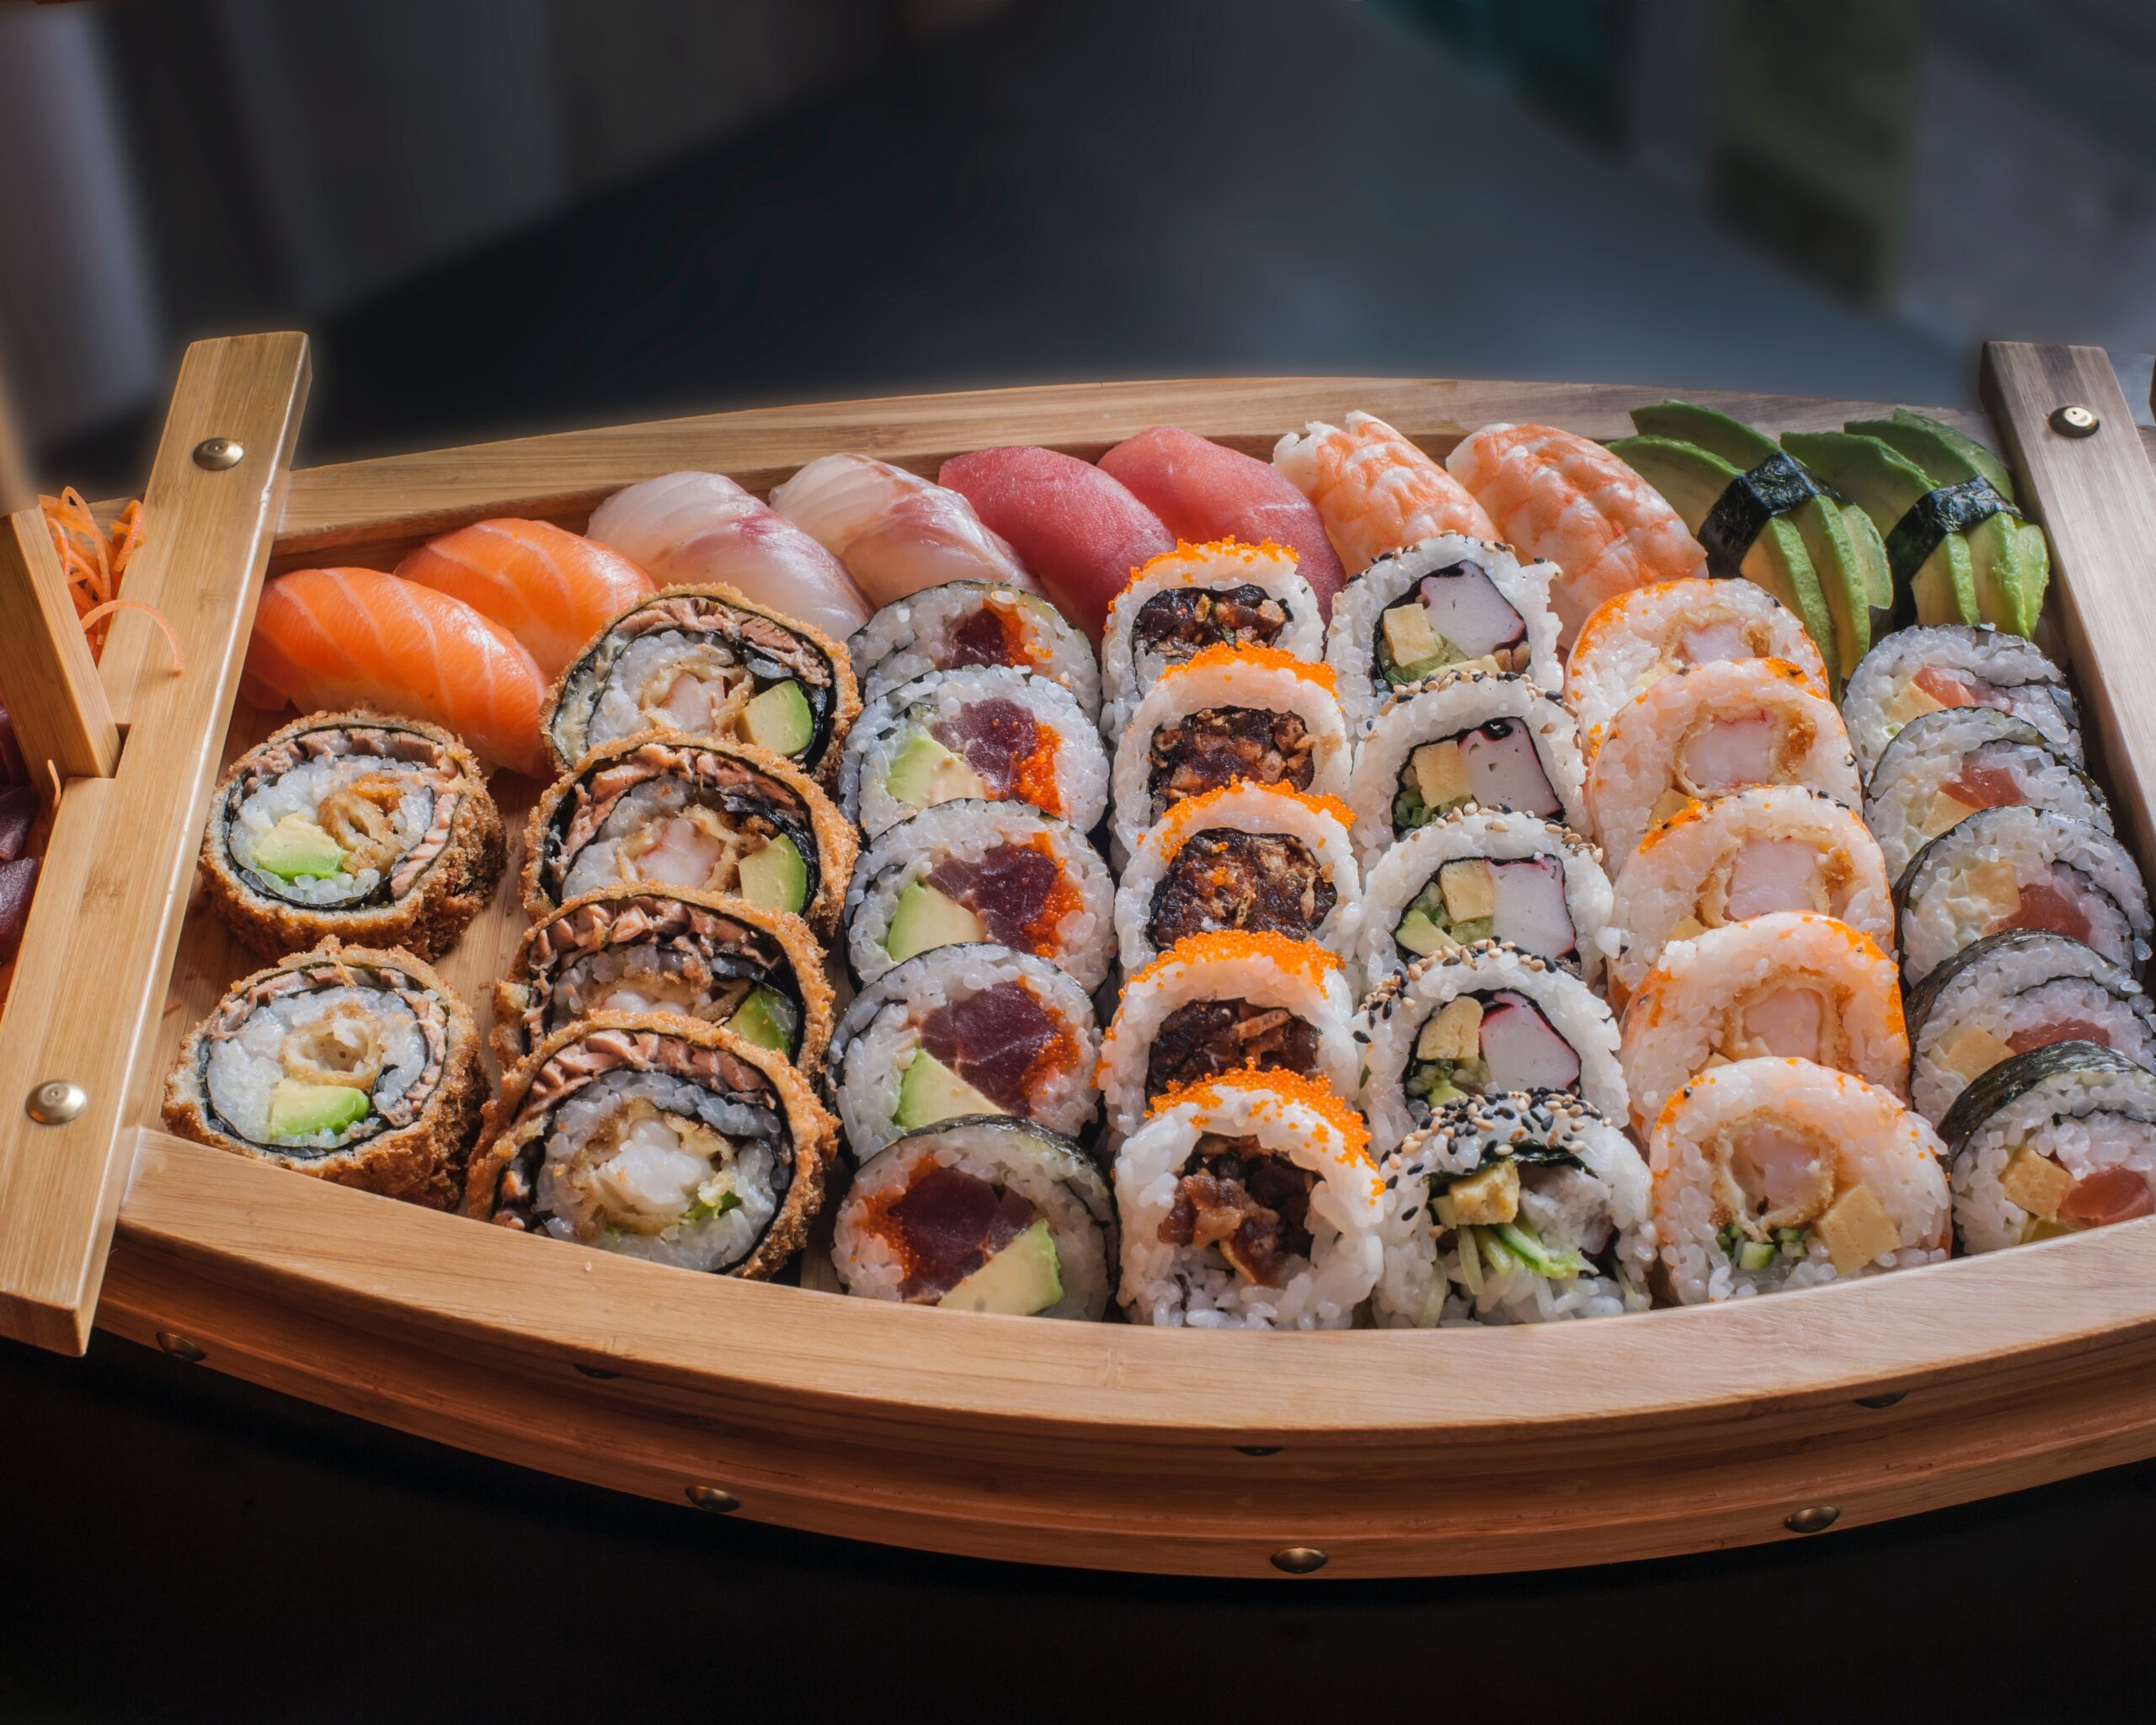 International Sushi Day